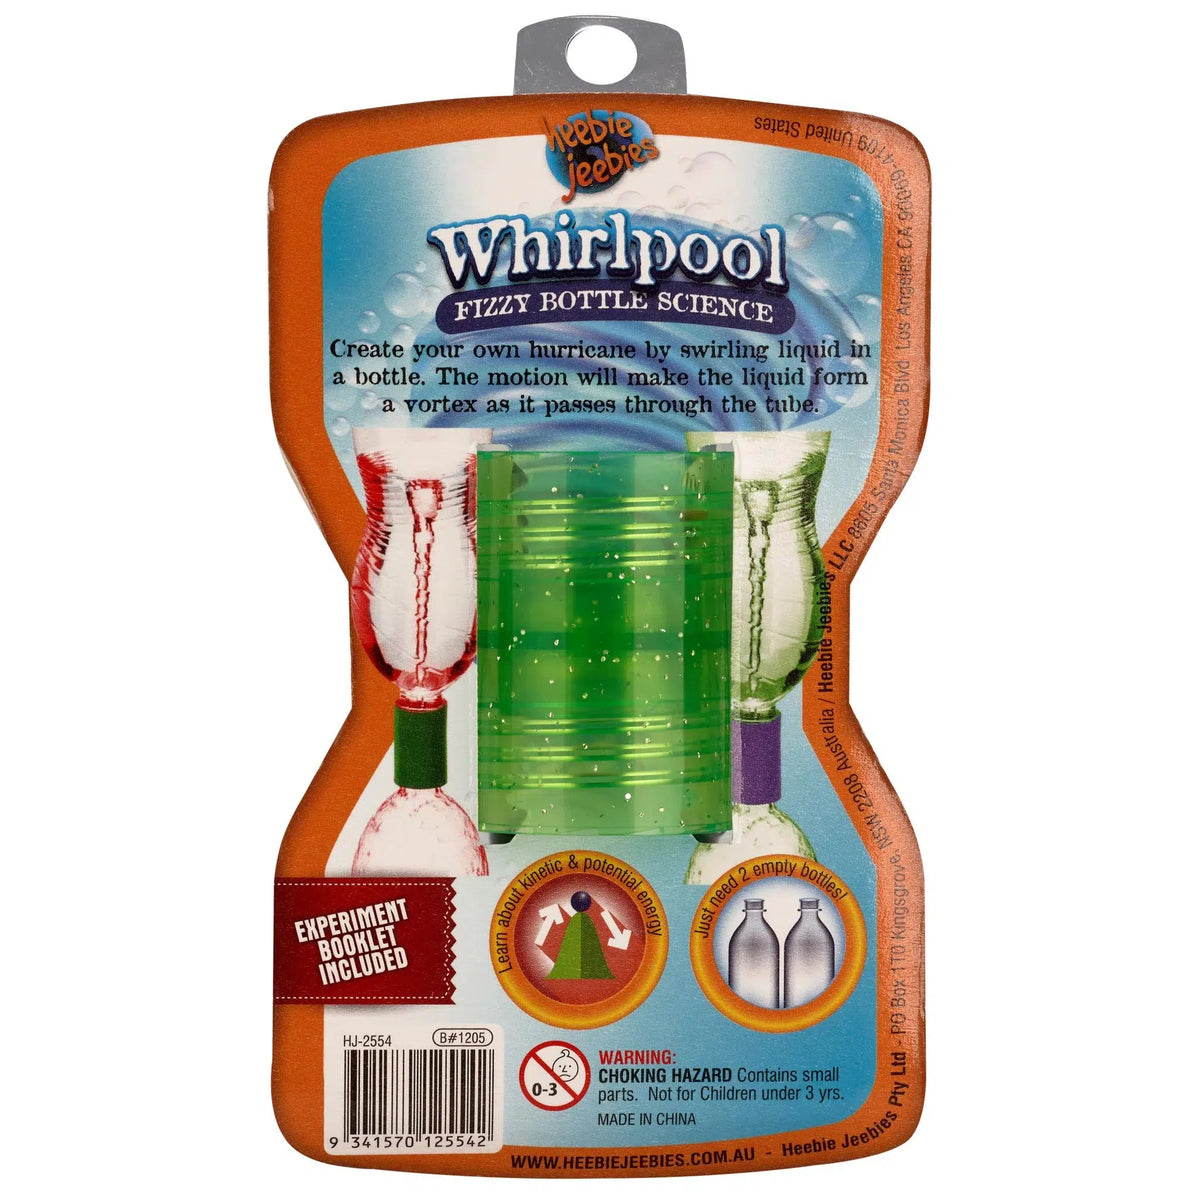 Rear view of Whirlpool Fizzy Bottle Science in its packaging.